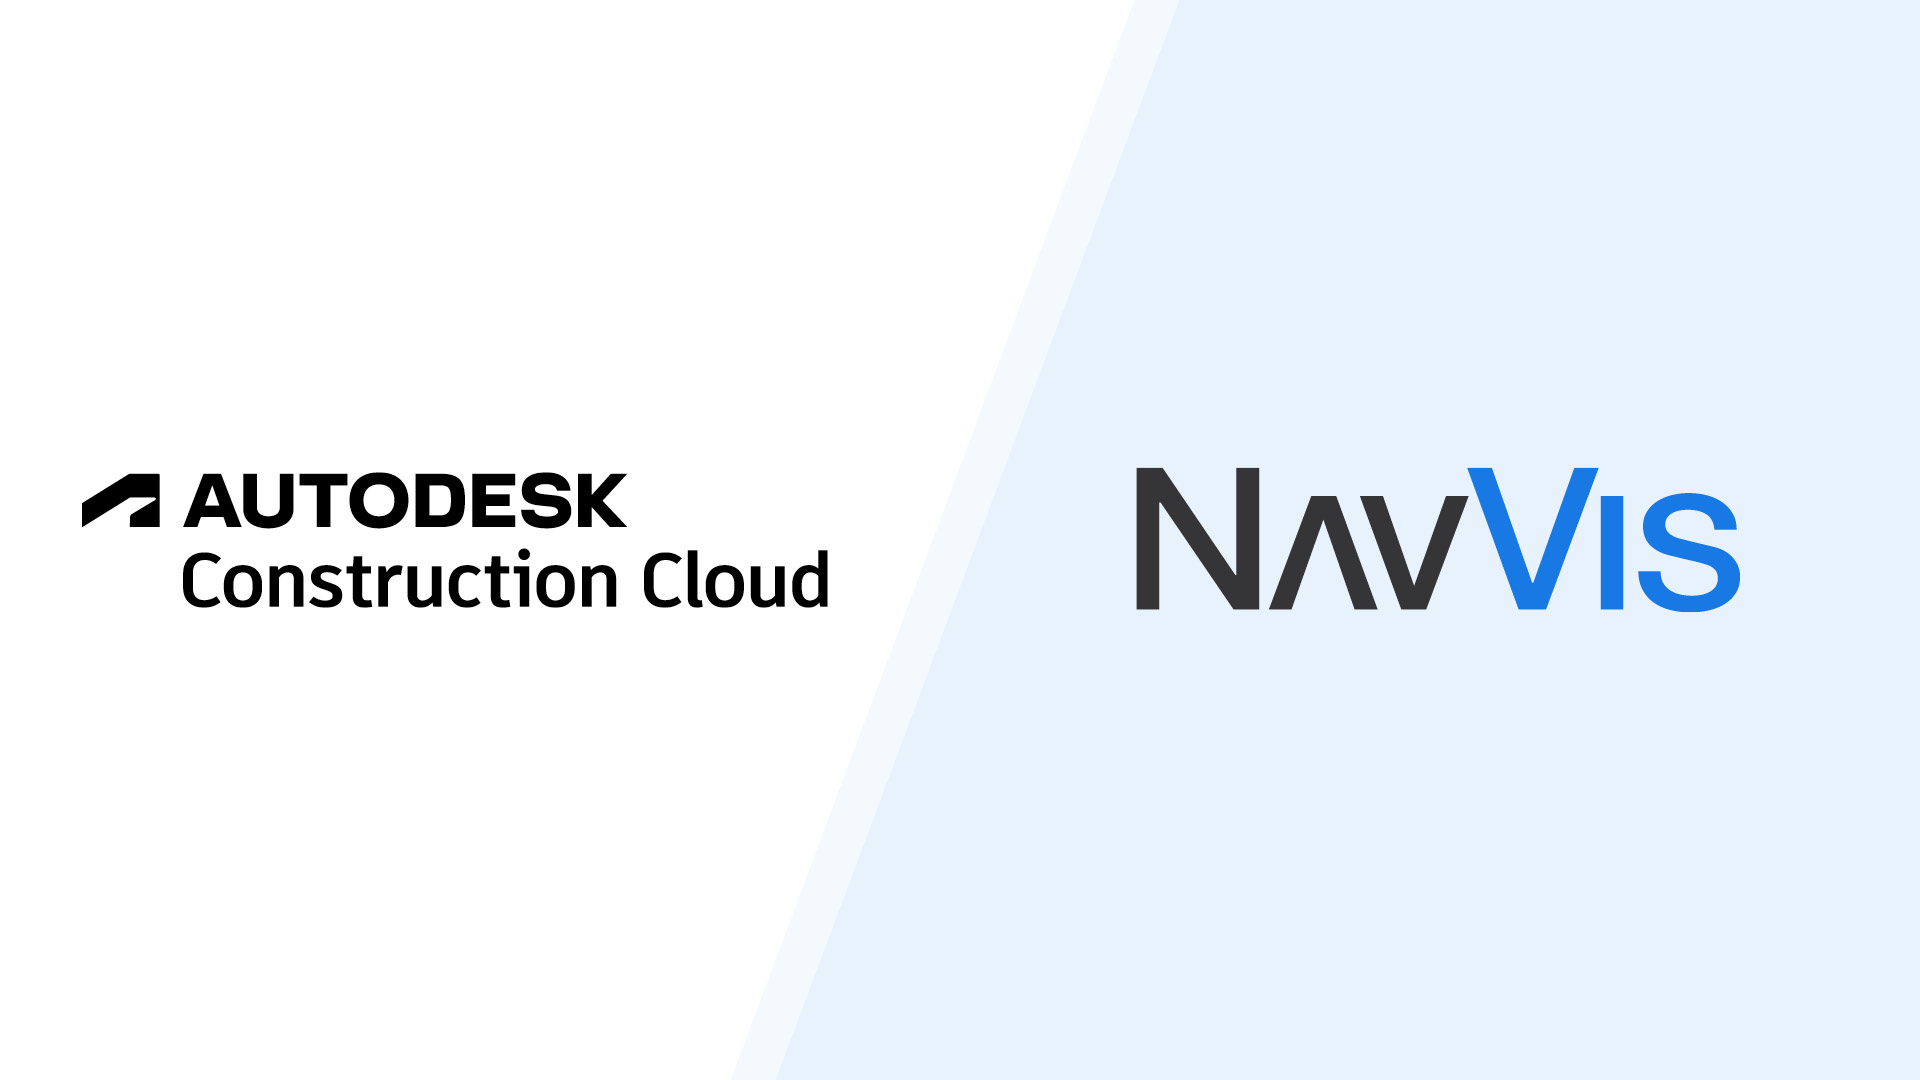 autodesk-construction-cloud-navvis-logo